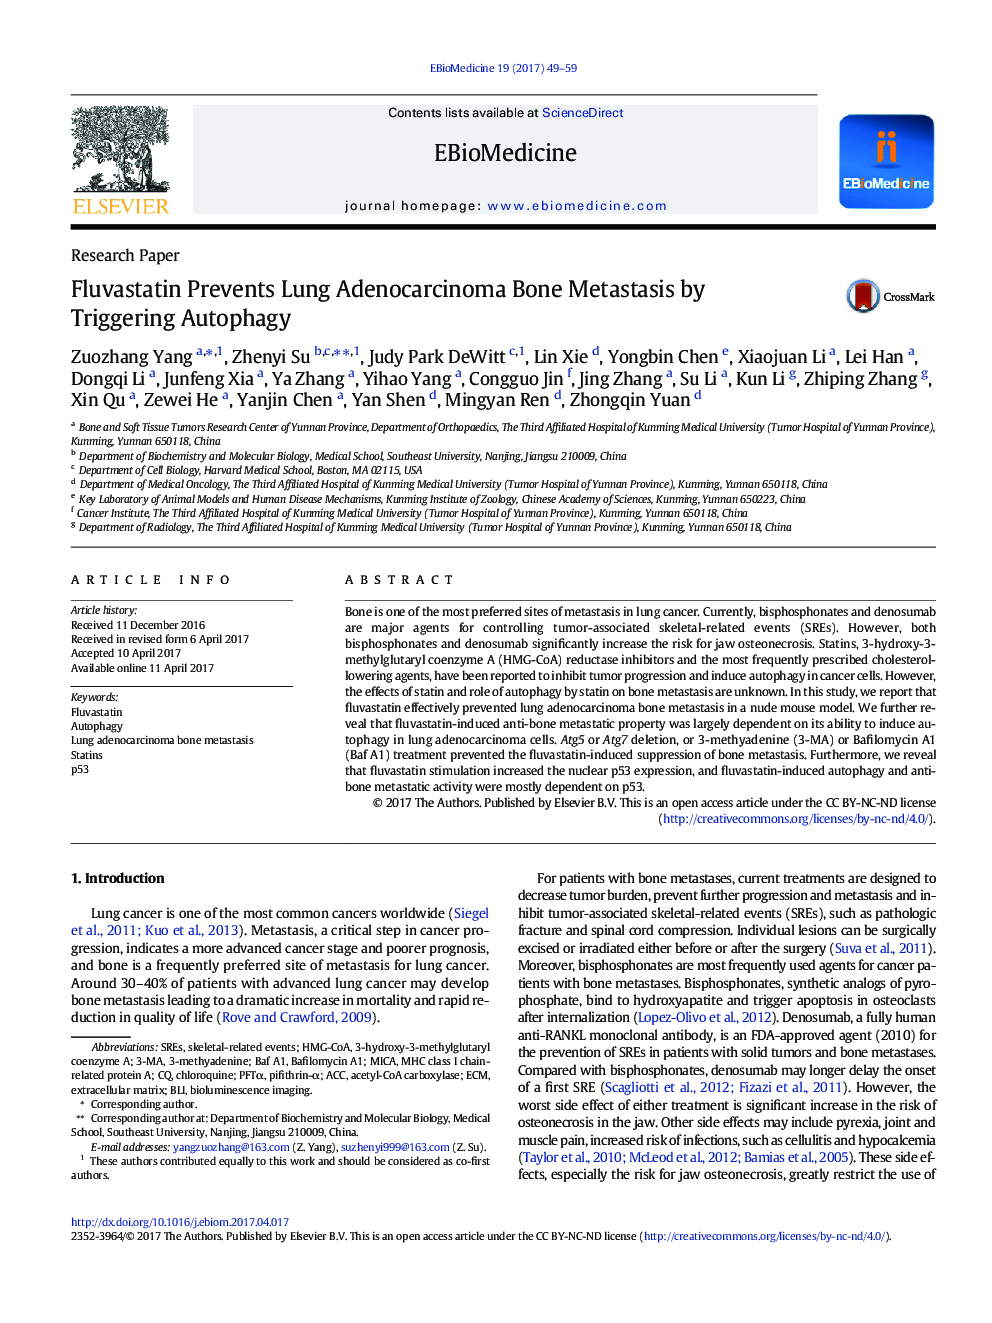 Fluvastatin Prevents Lung Adenocarcinoma Bone Metastasis by Triggering Autophagy